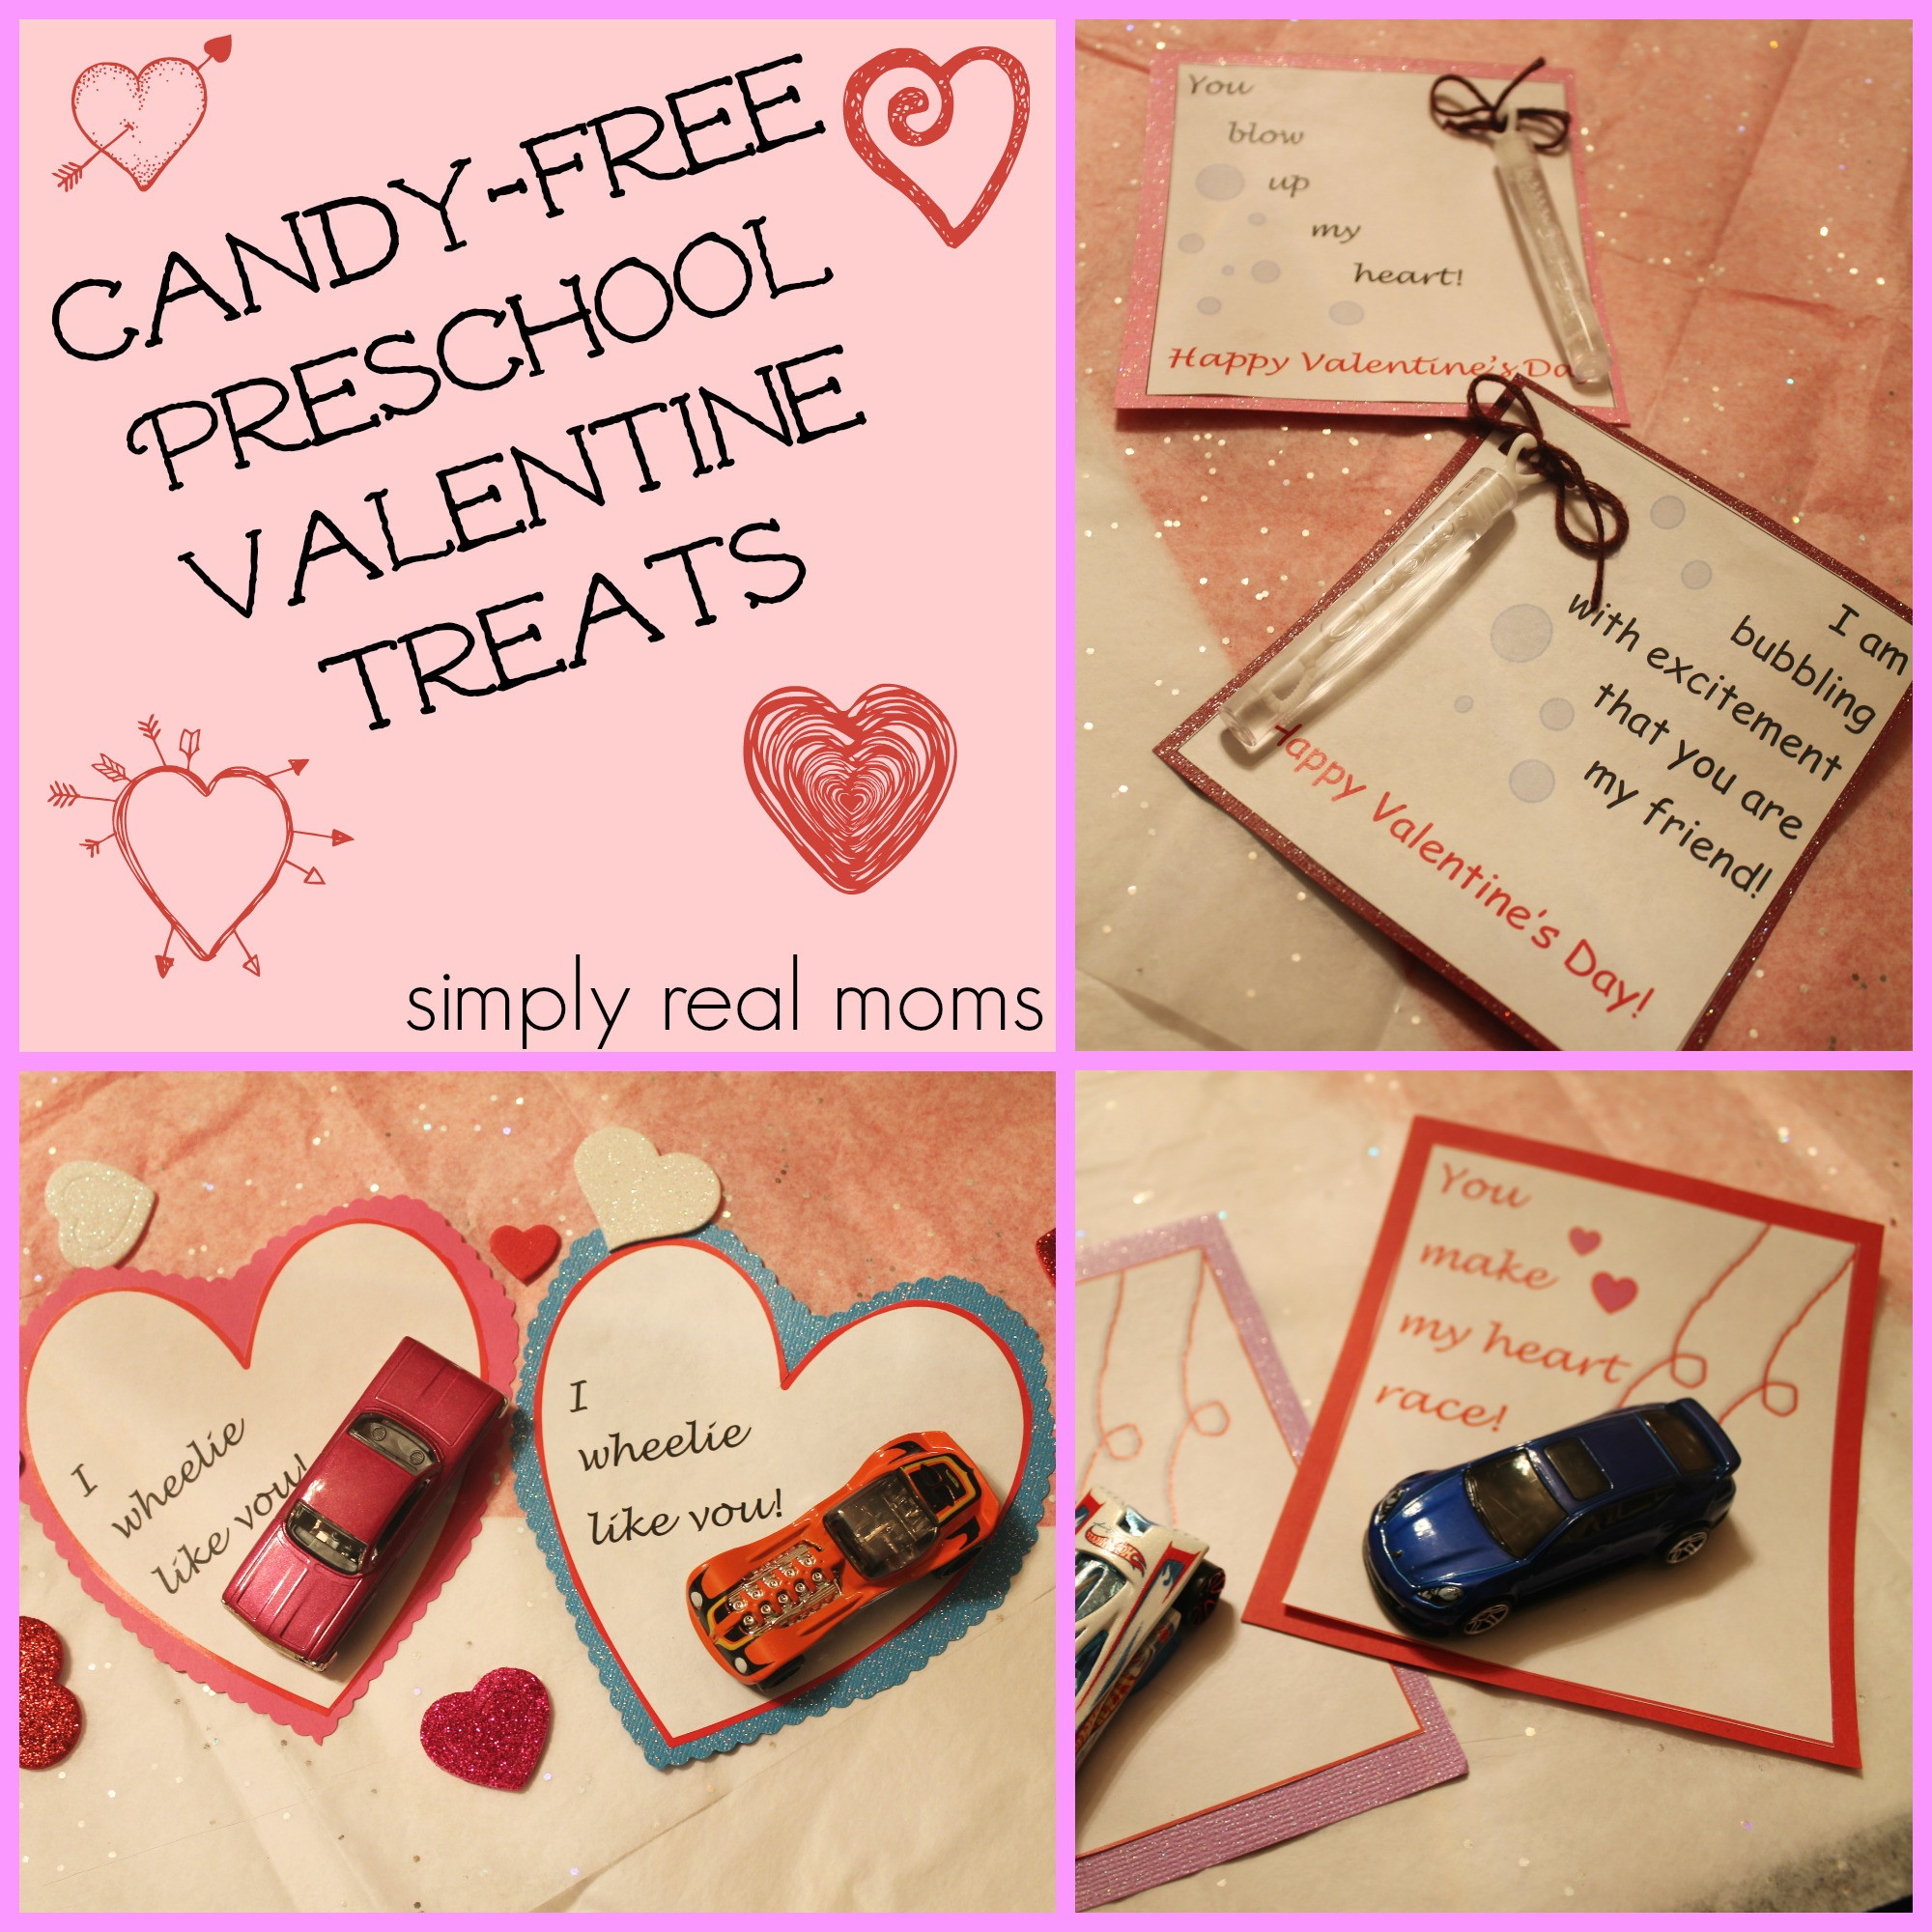 Preschool Valentine Gift Ideas
 Candy Free Preschool Valentine Treats